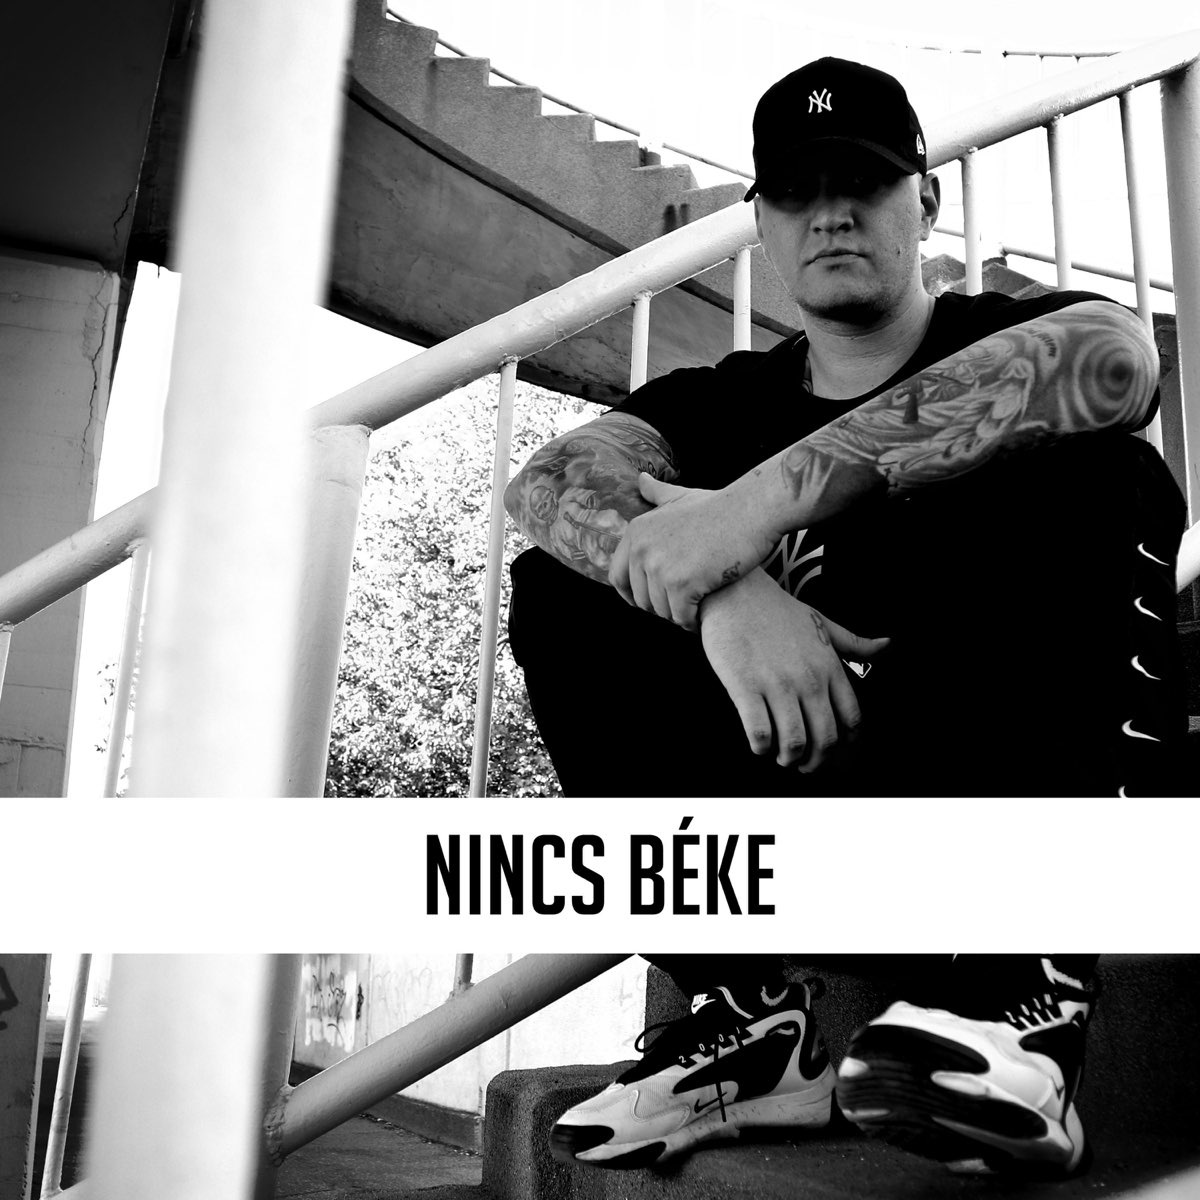 Nincs béke - Single by Essemm on Apple Music